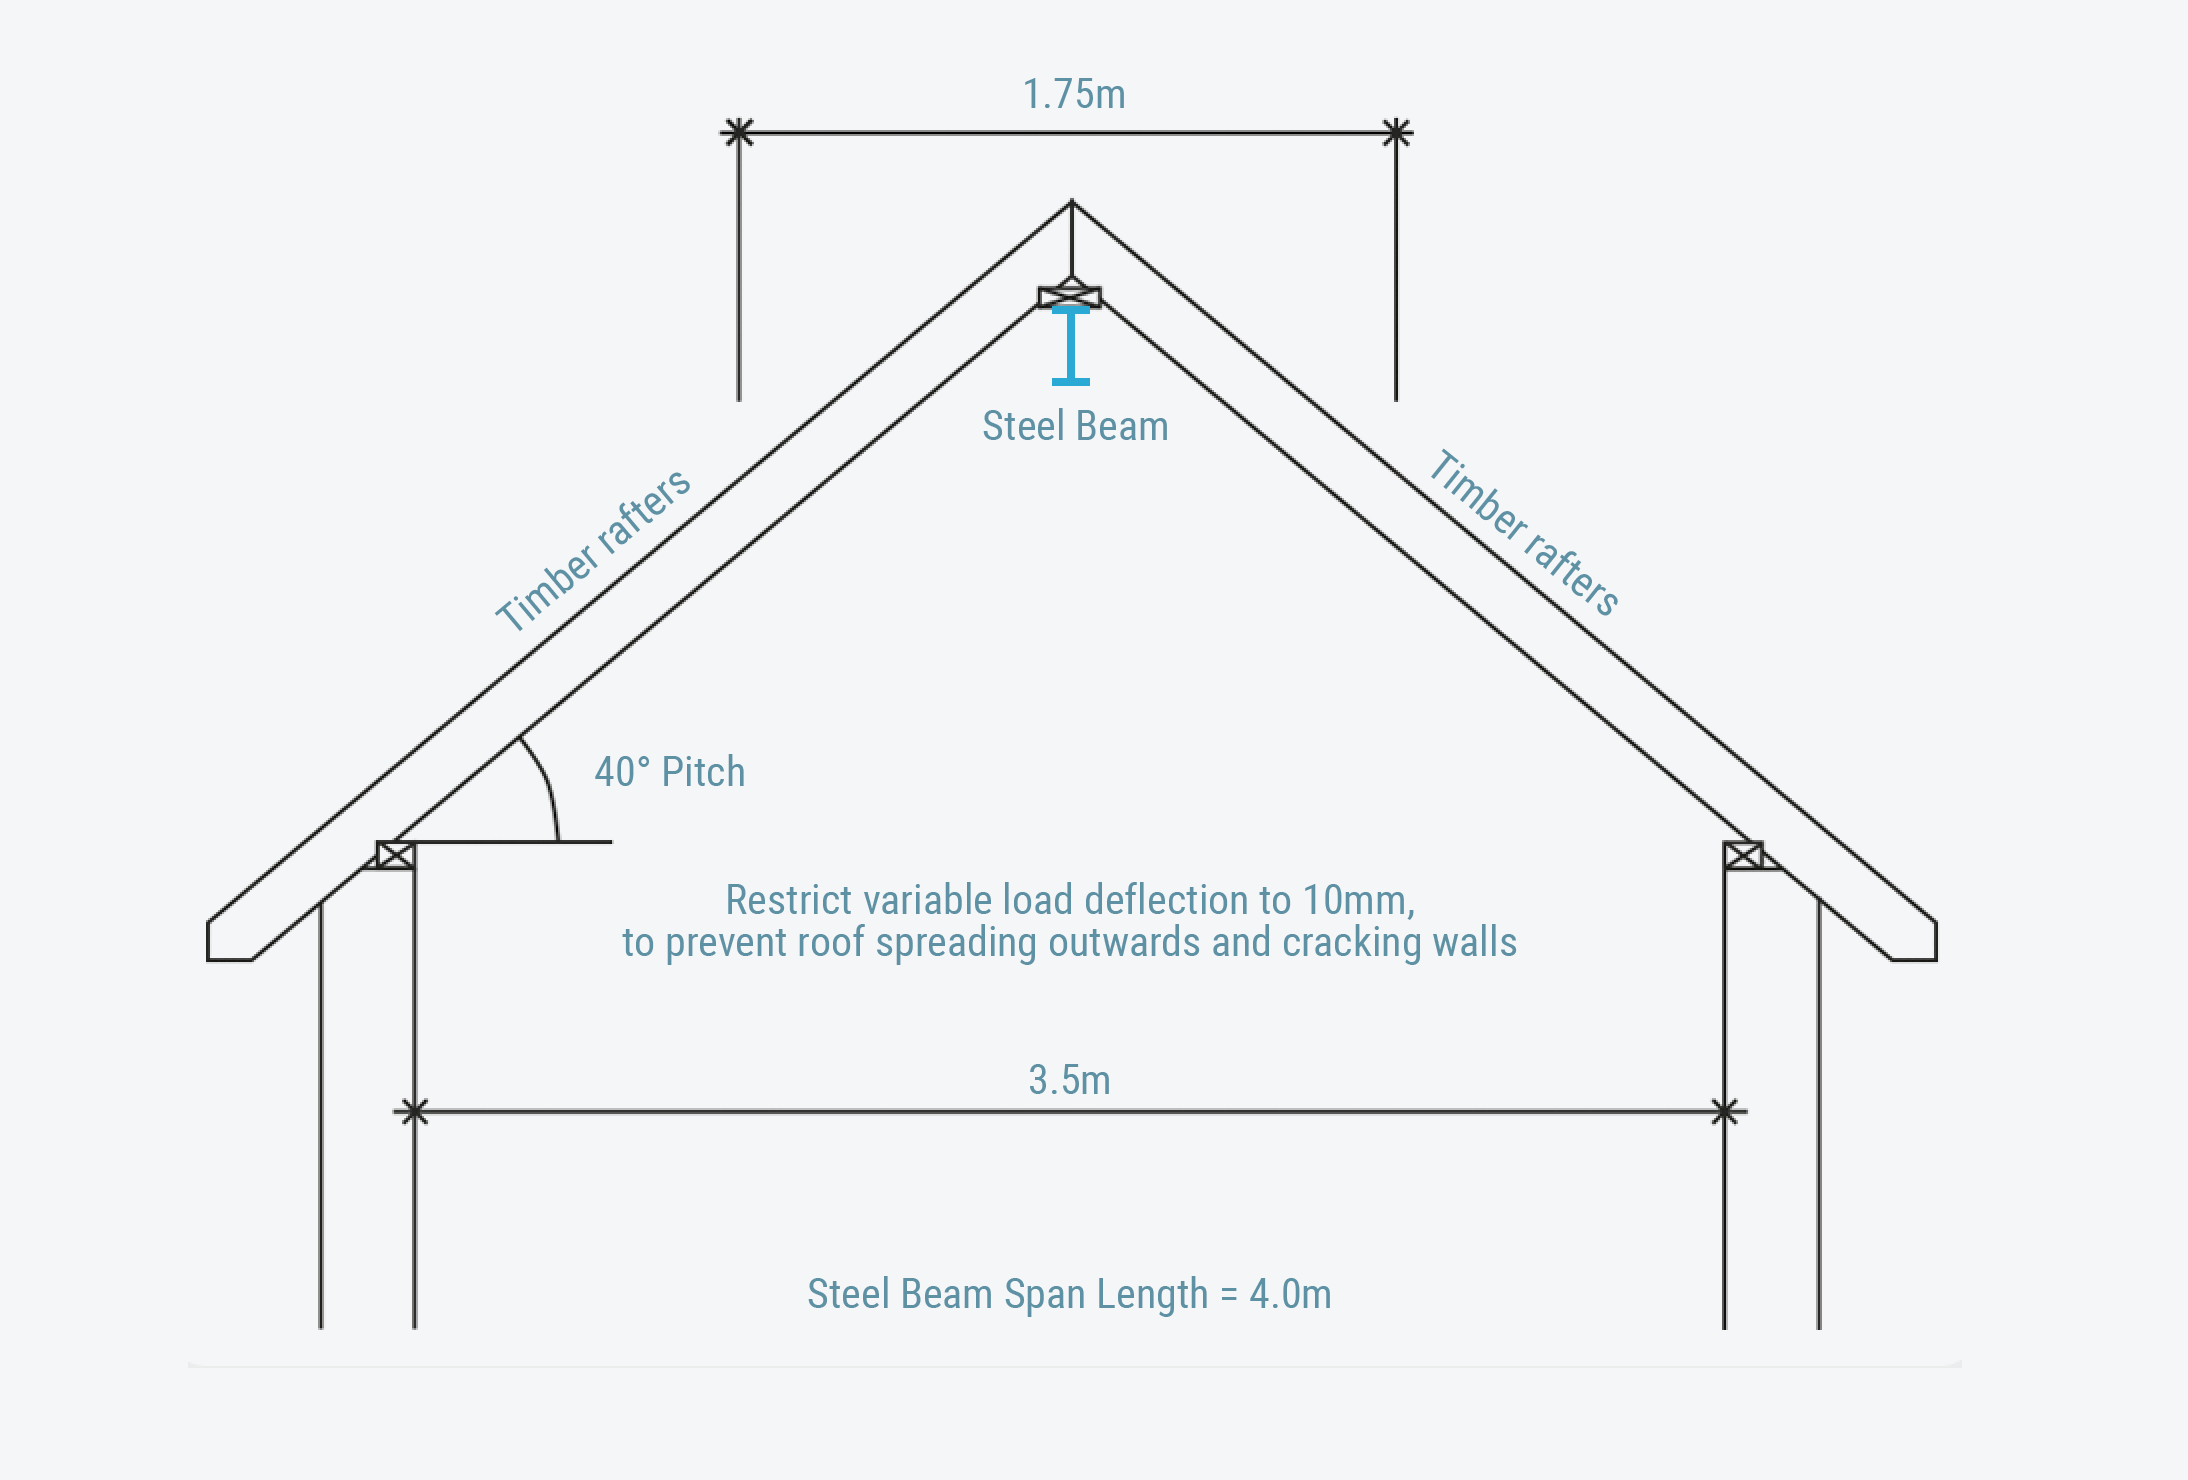 steel beam calculations for steel ridge beam